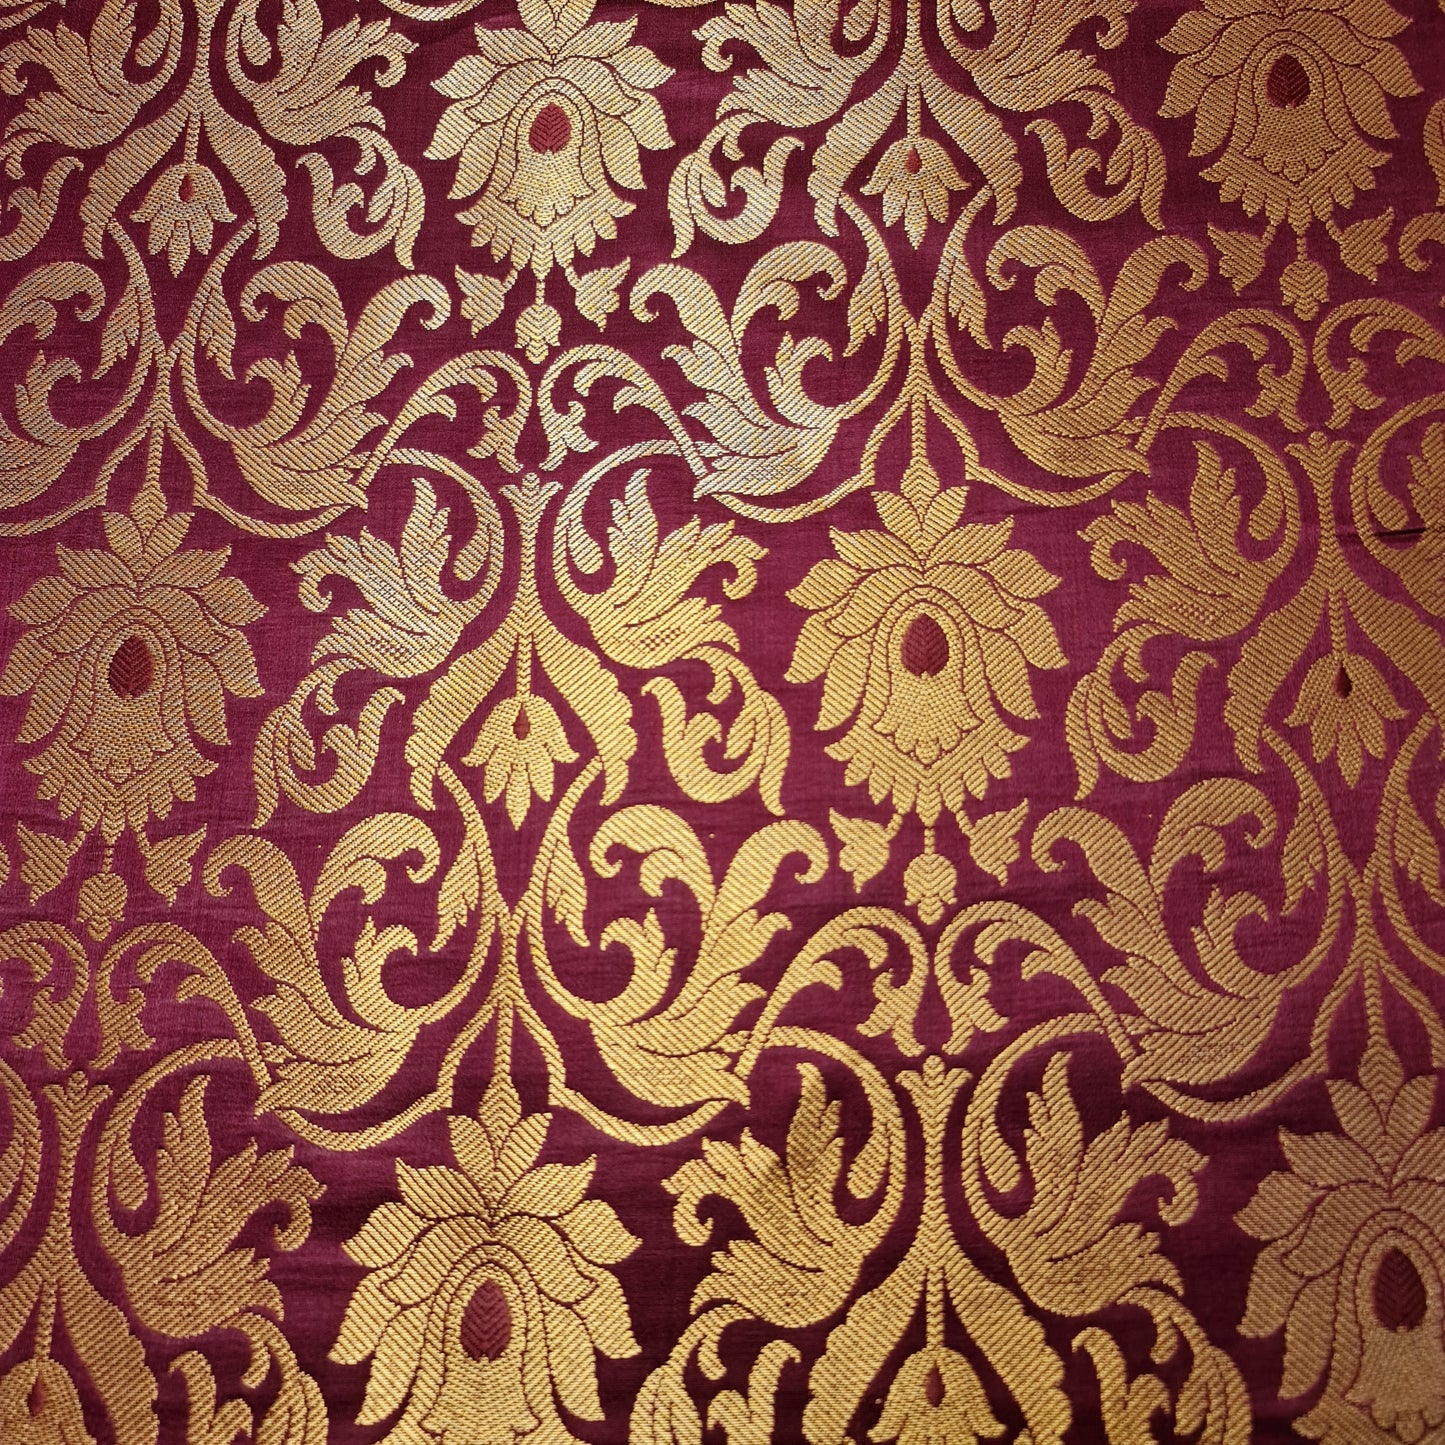 Luxurious Floral Gold Metallic Indian Banarasi Brocade Fabric 44" By The Meter (BURGUNDY)